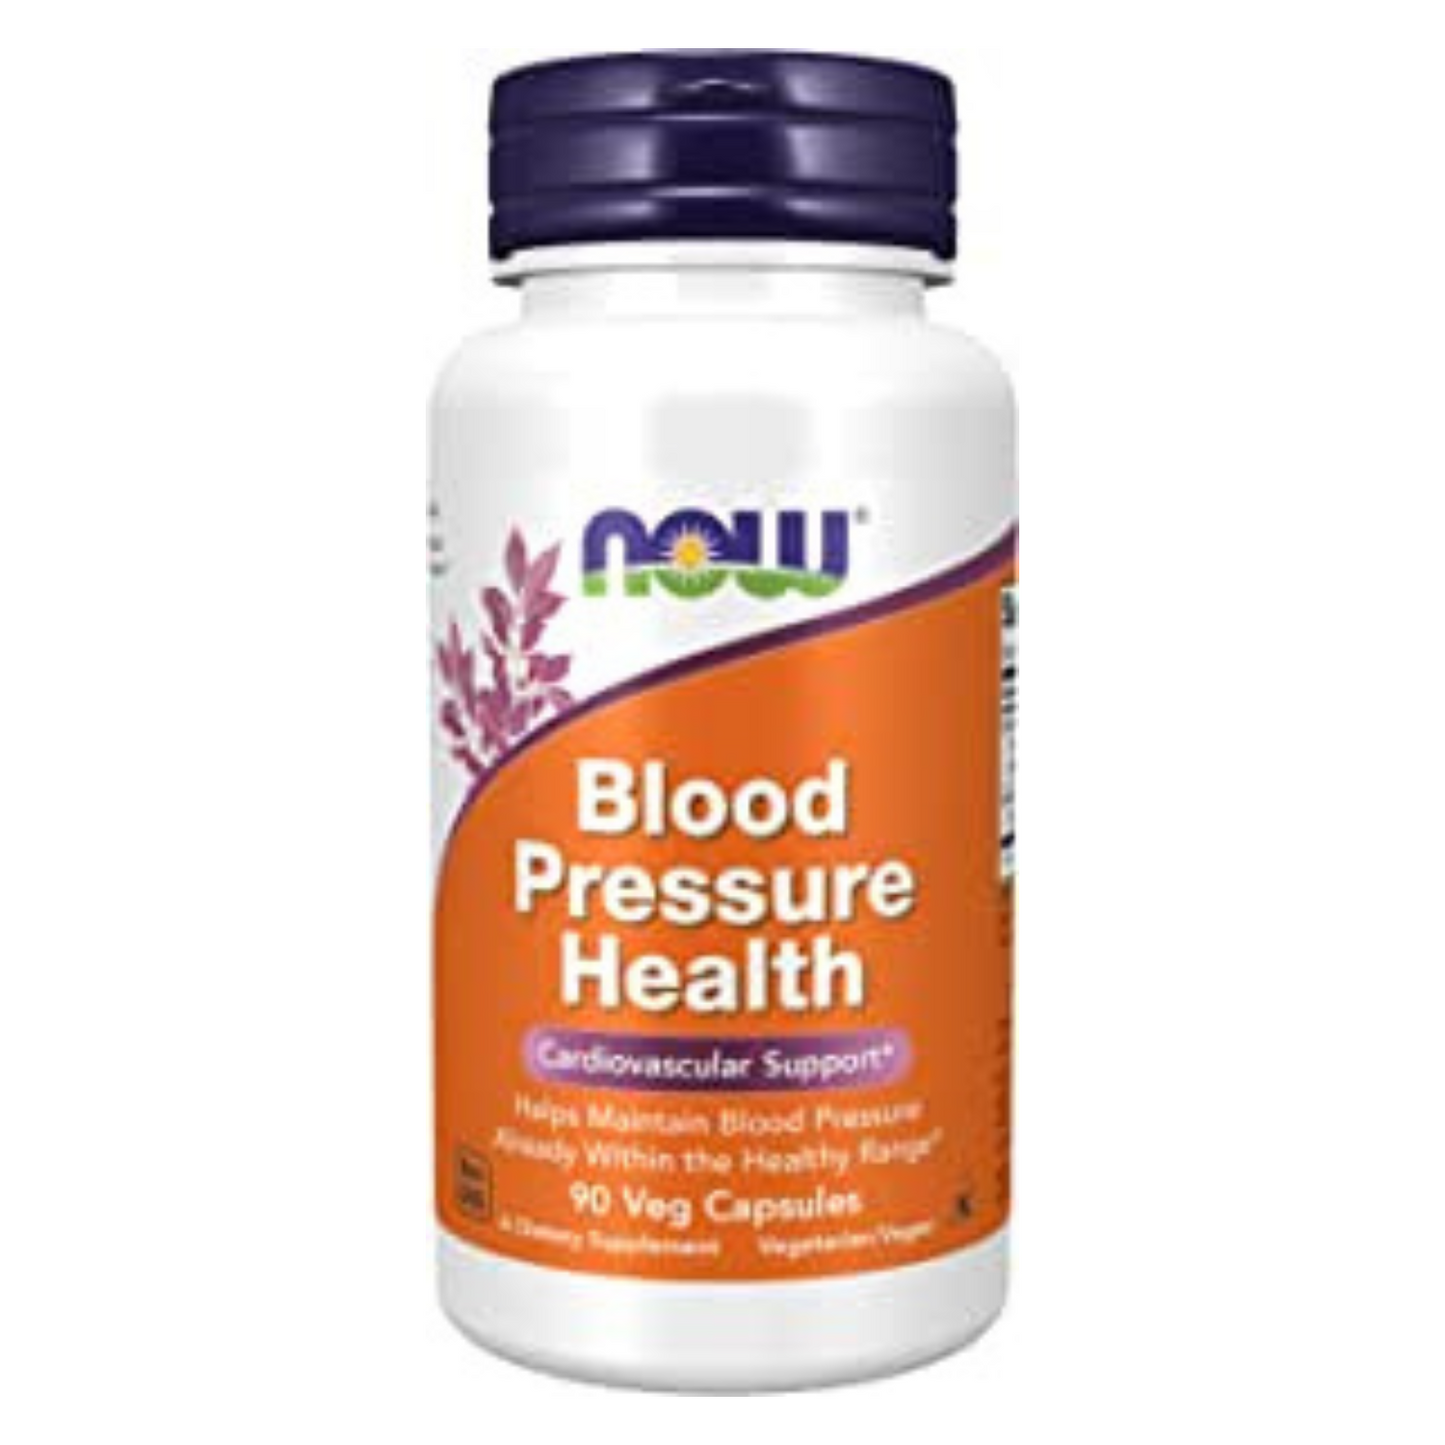 NOW - Blood Pressure Health with MegaNatural-BP - 90 Veg Capsules